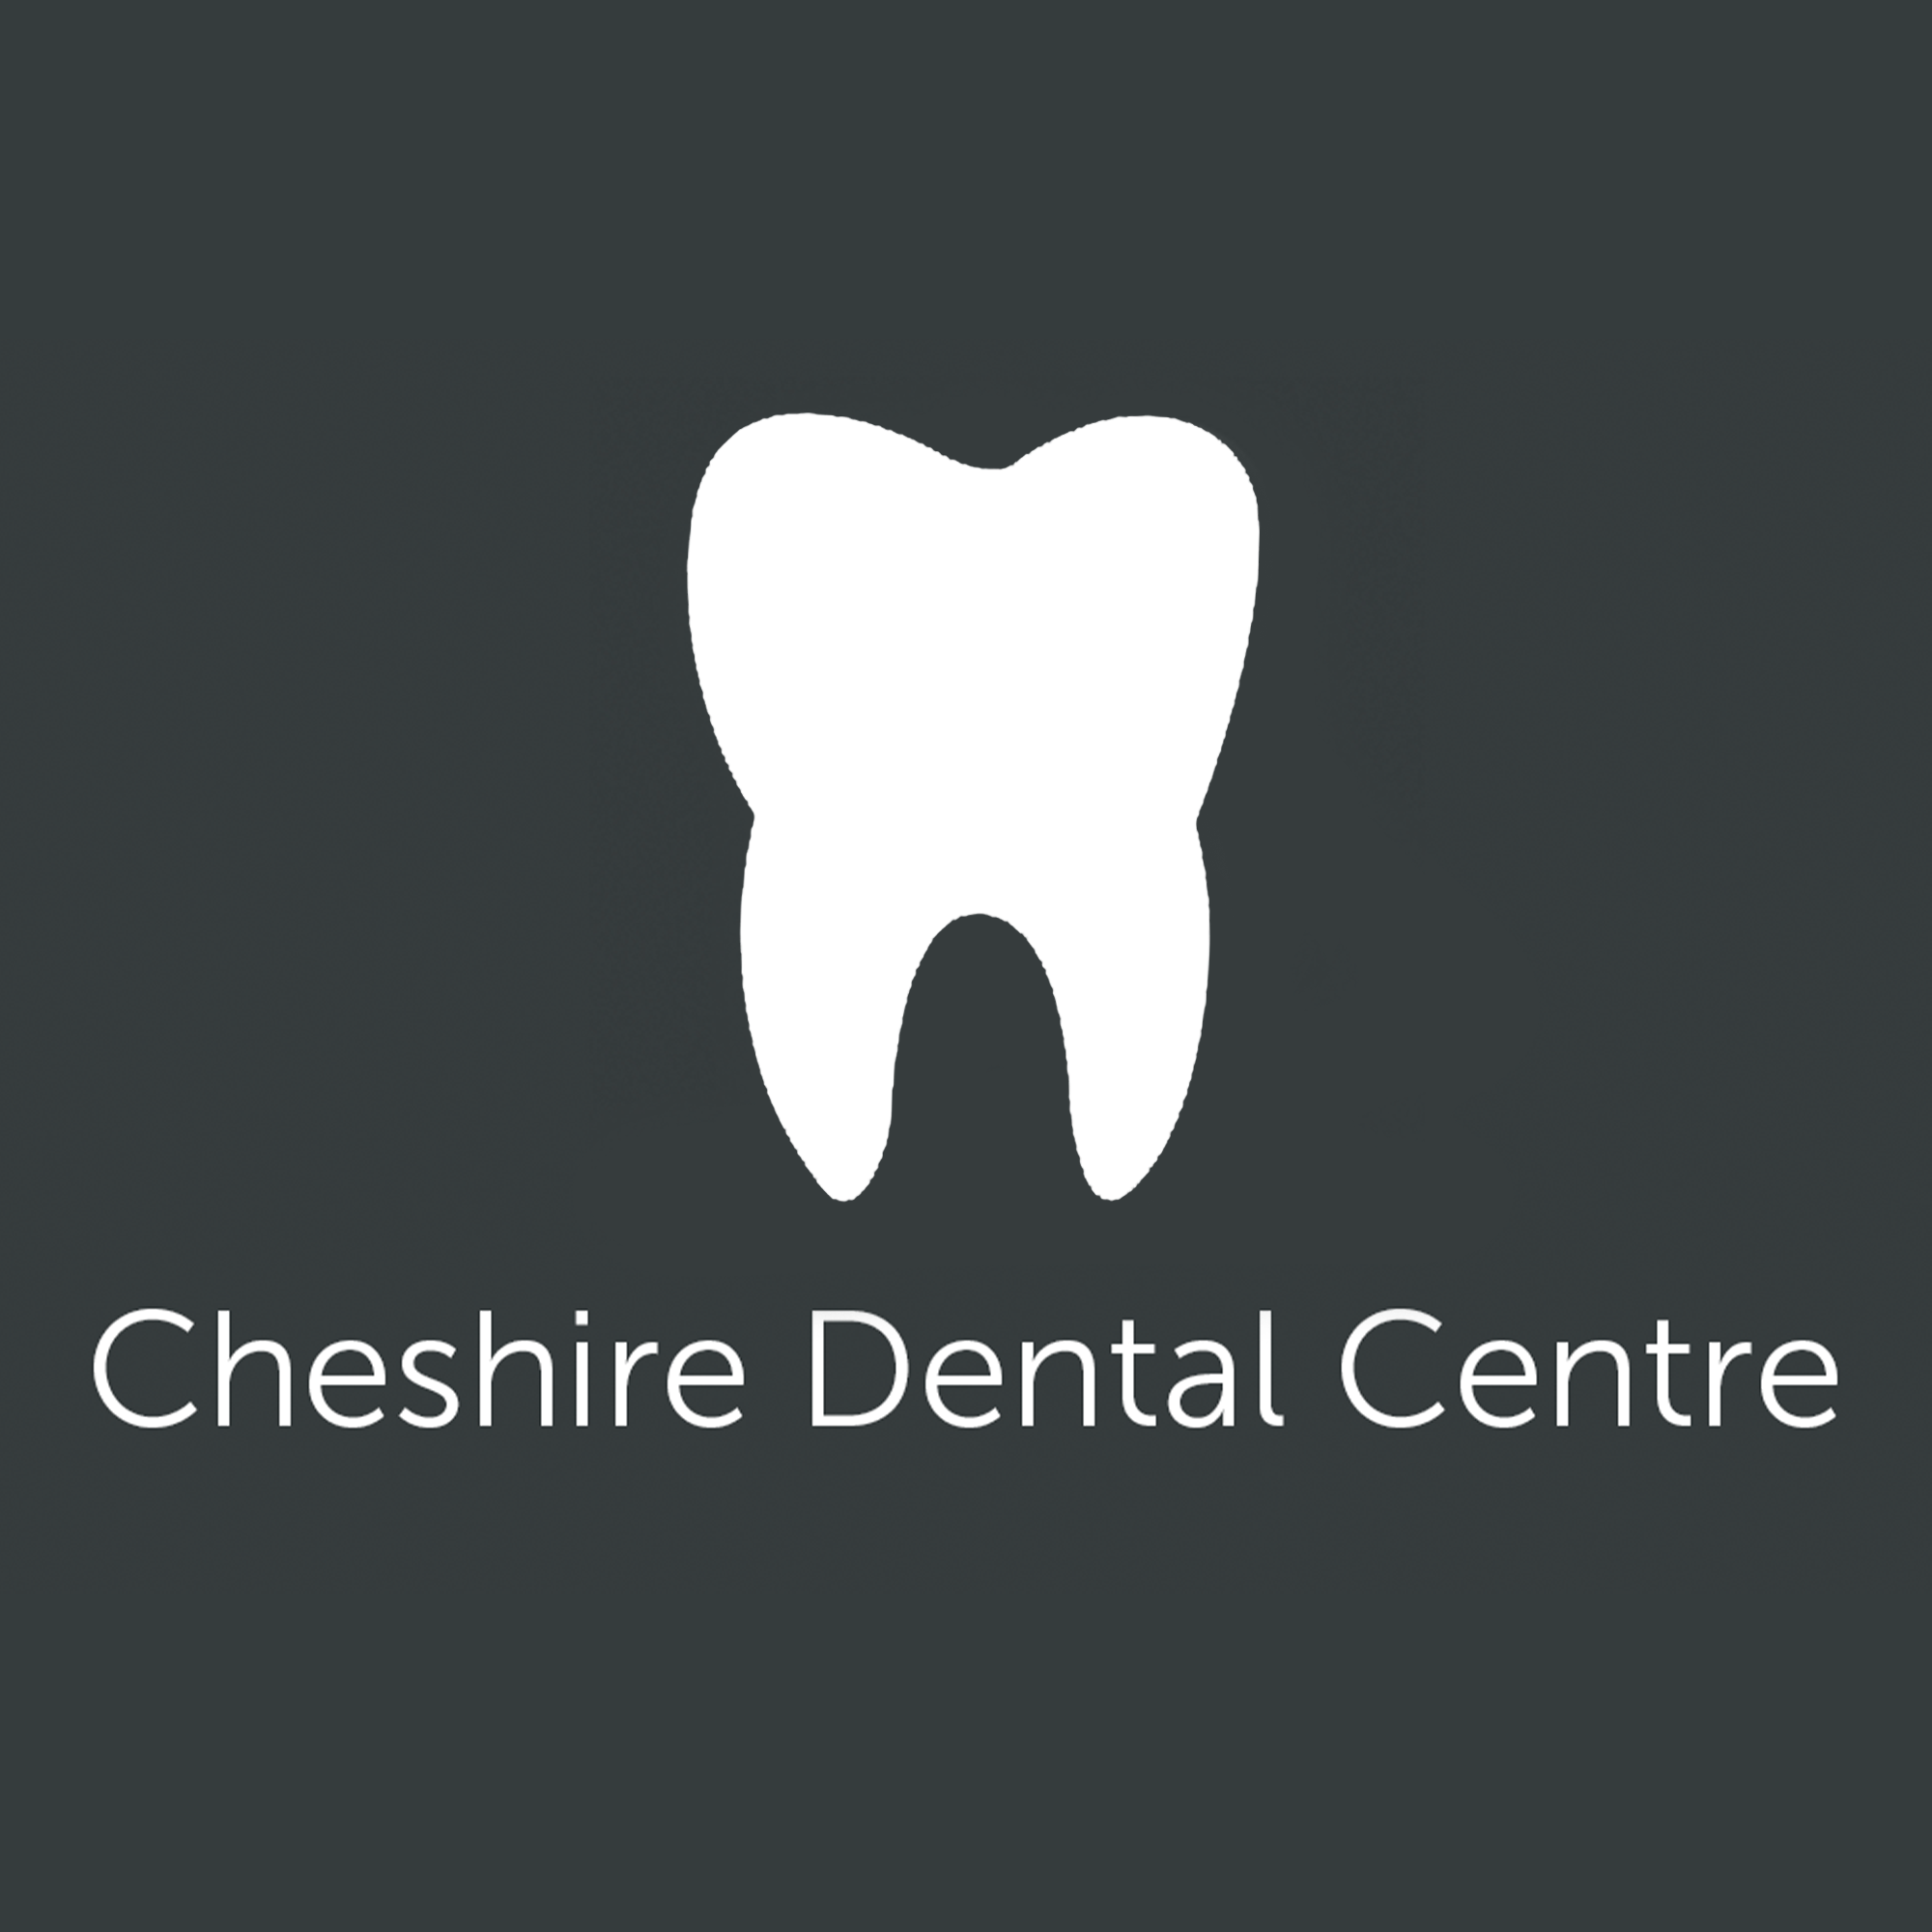 Cheshire Dental Centre